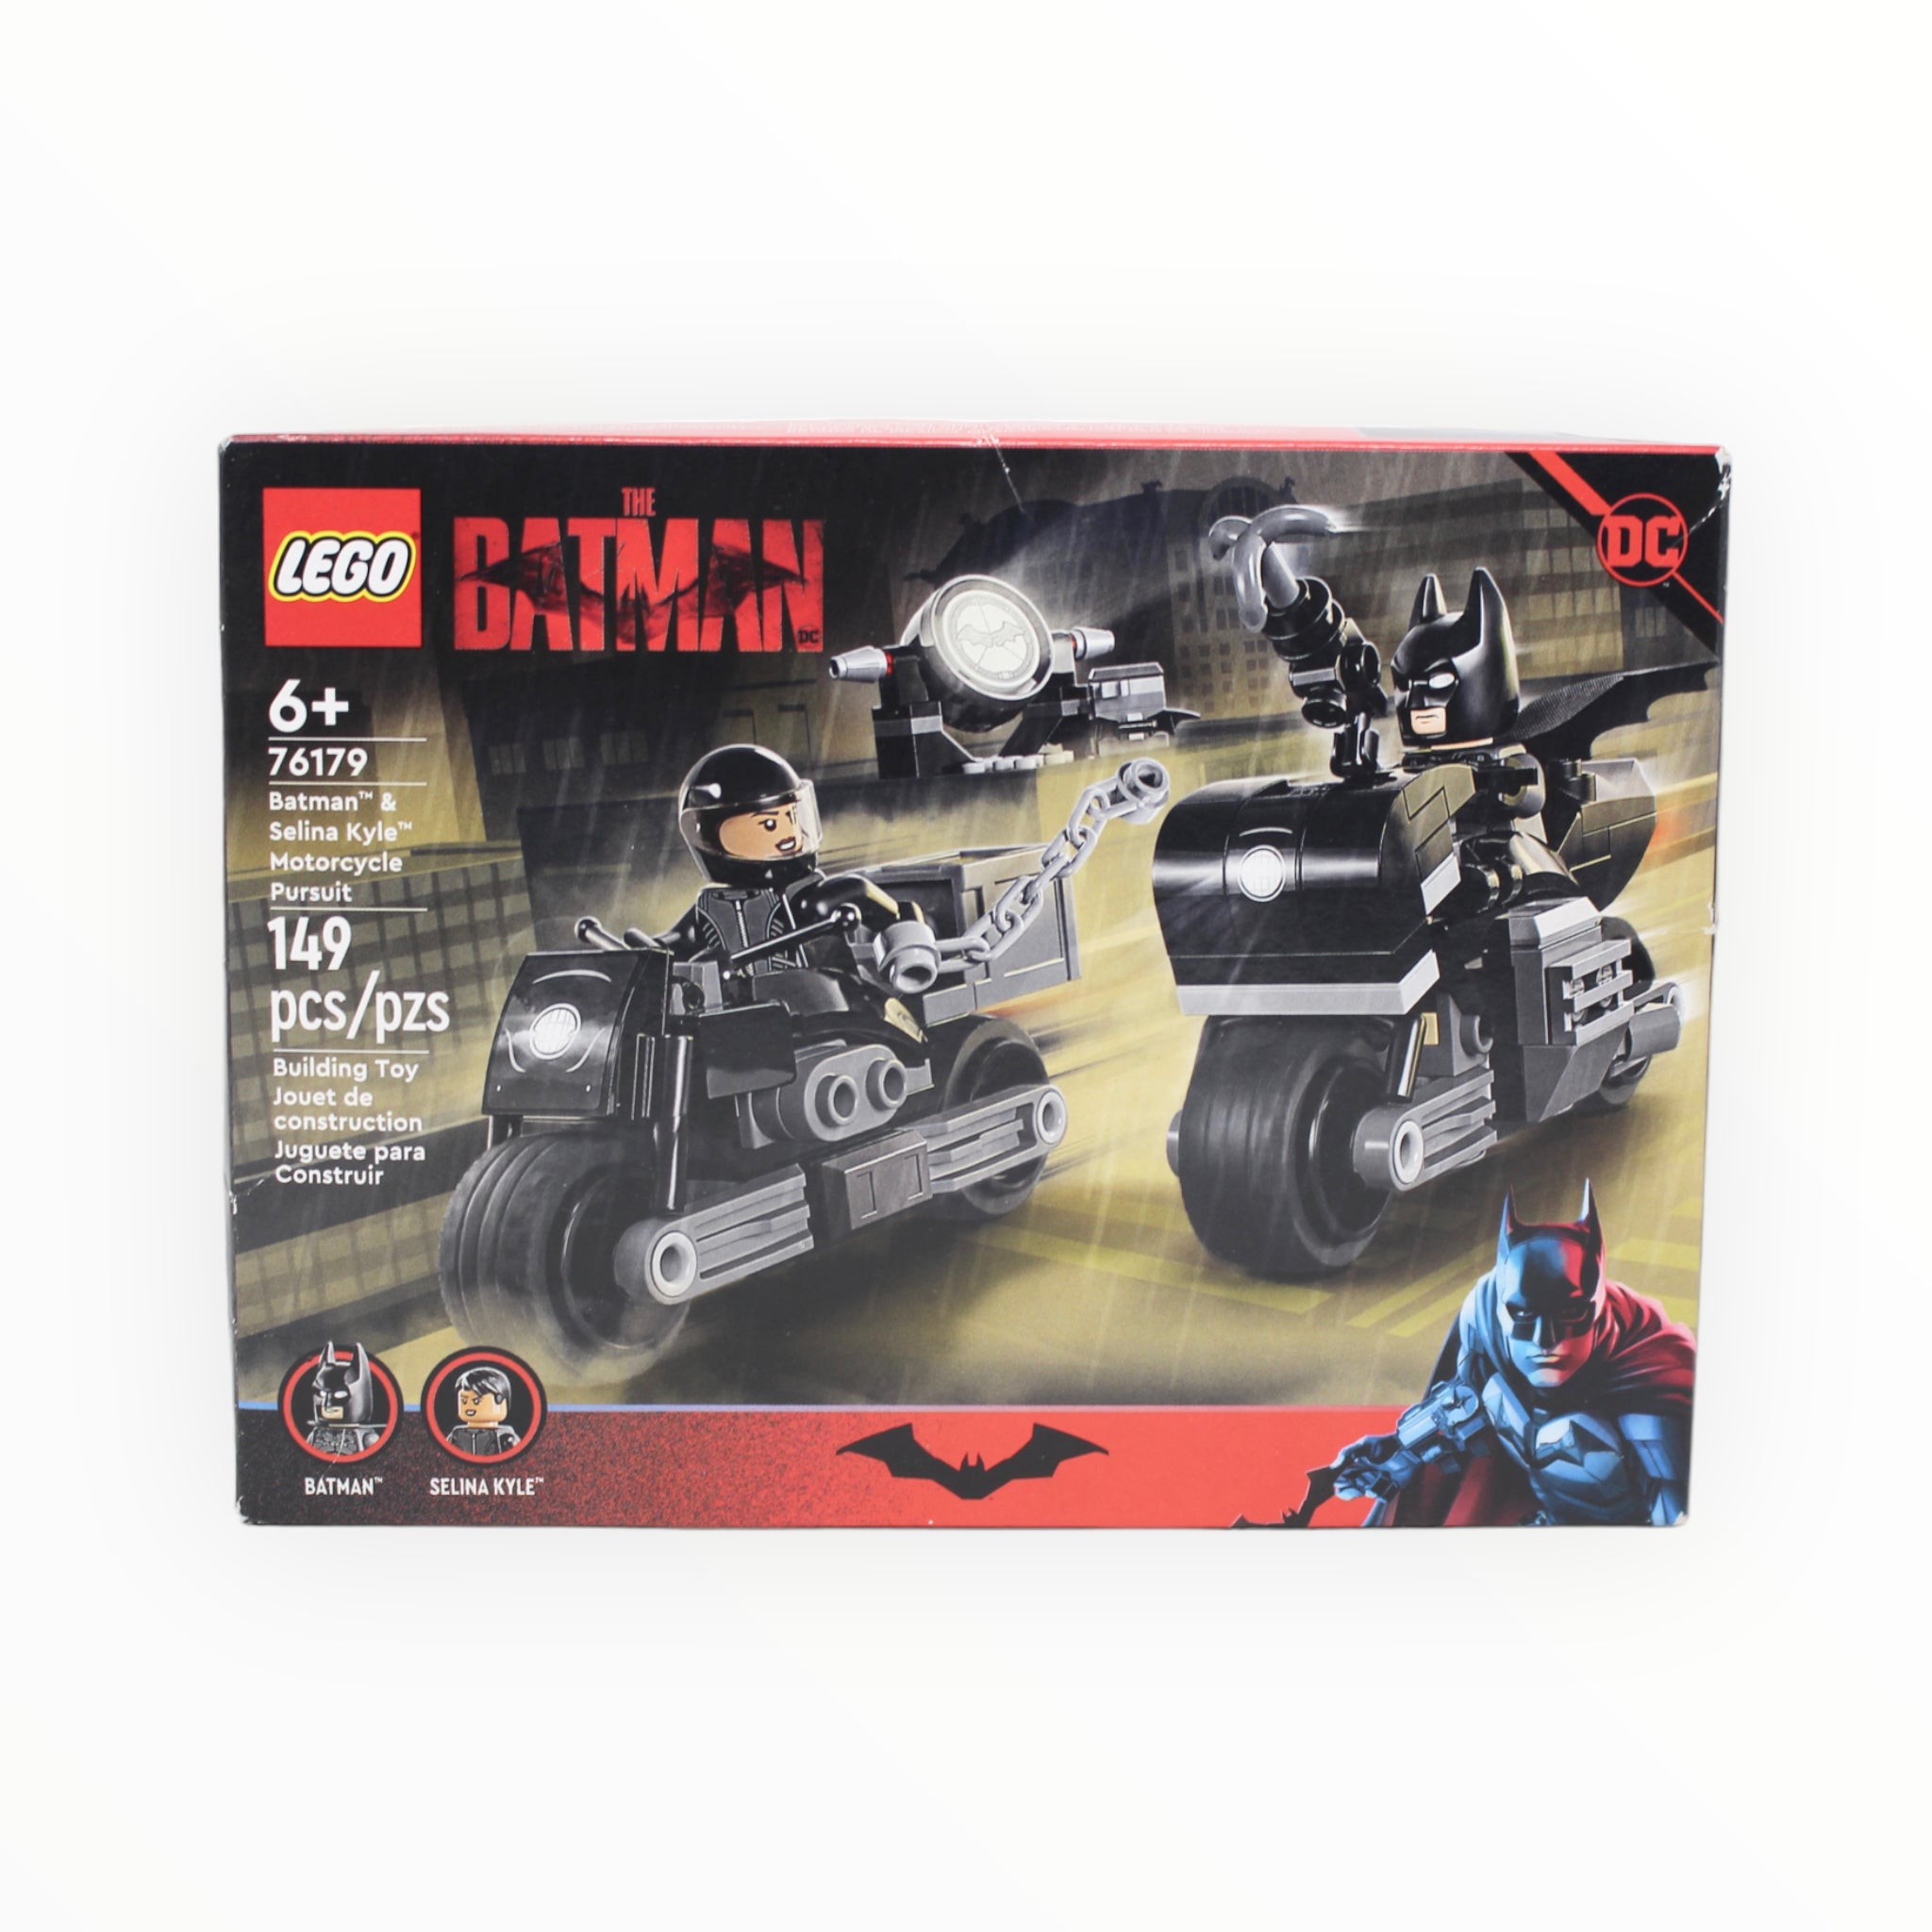 Retired Set 76179 The Batman & Selina Kyle Motorcycle Pursuit